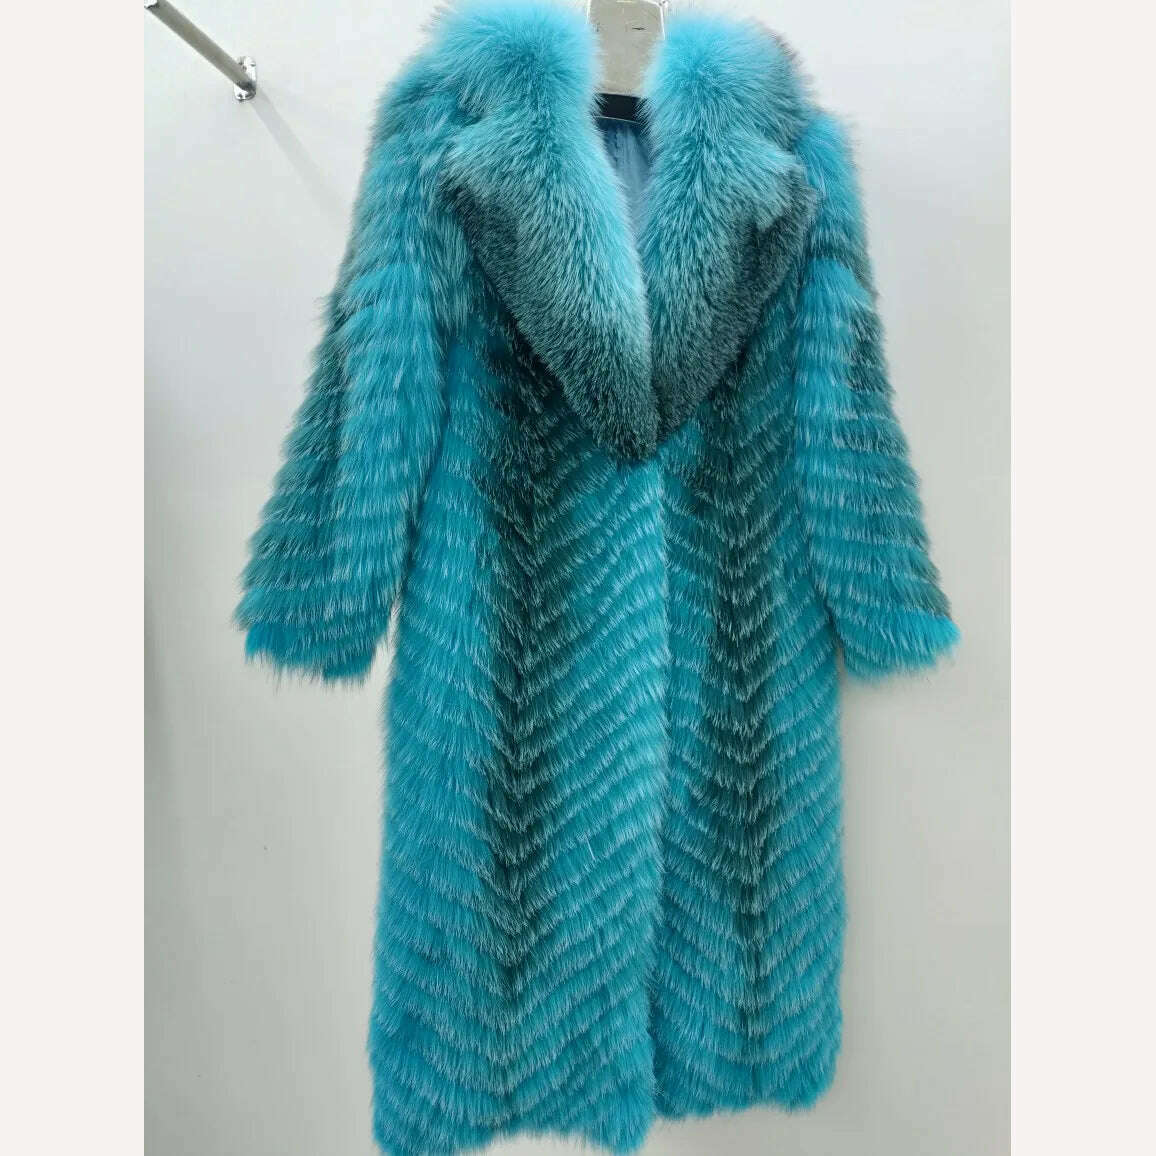 KIMLUD, Winter Long High Quality Real Cross Fox Fur Coat Women X-Length With Big Hood Pink Fashion Thicken Warm Fur Jacket Female, KIMLUD Womens Clothes